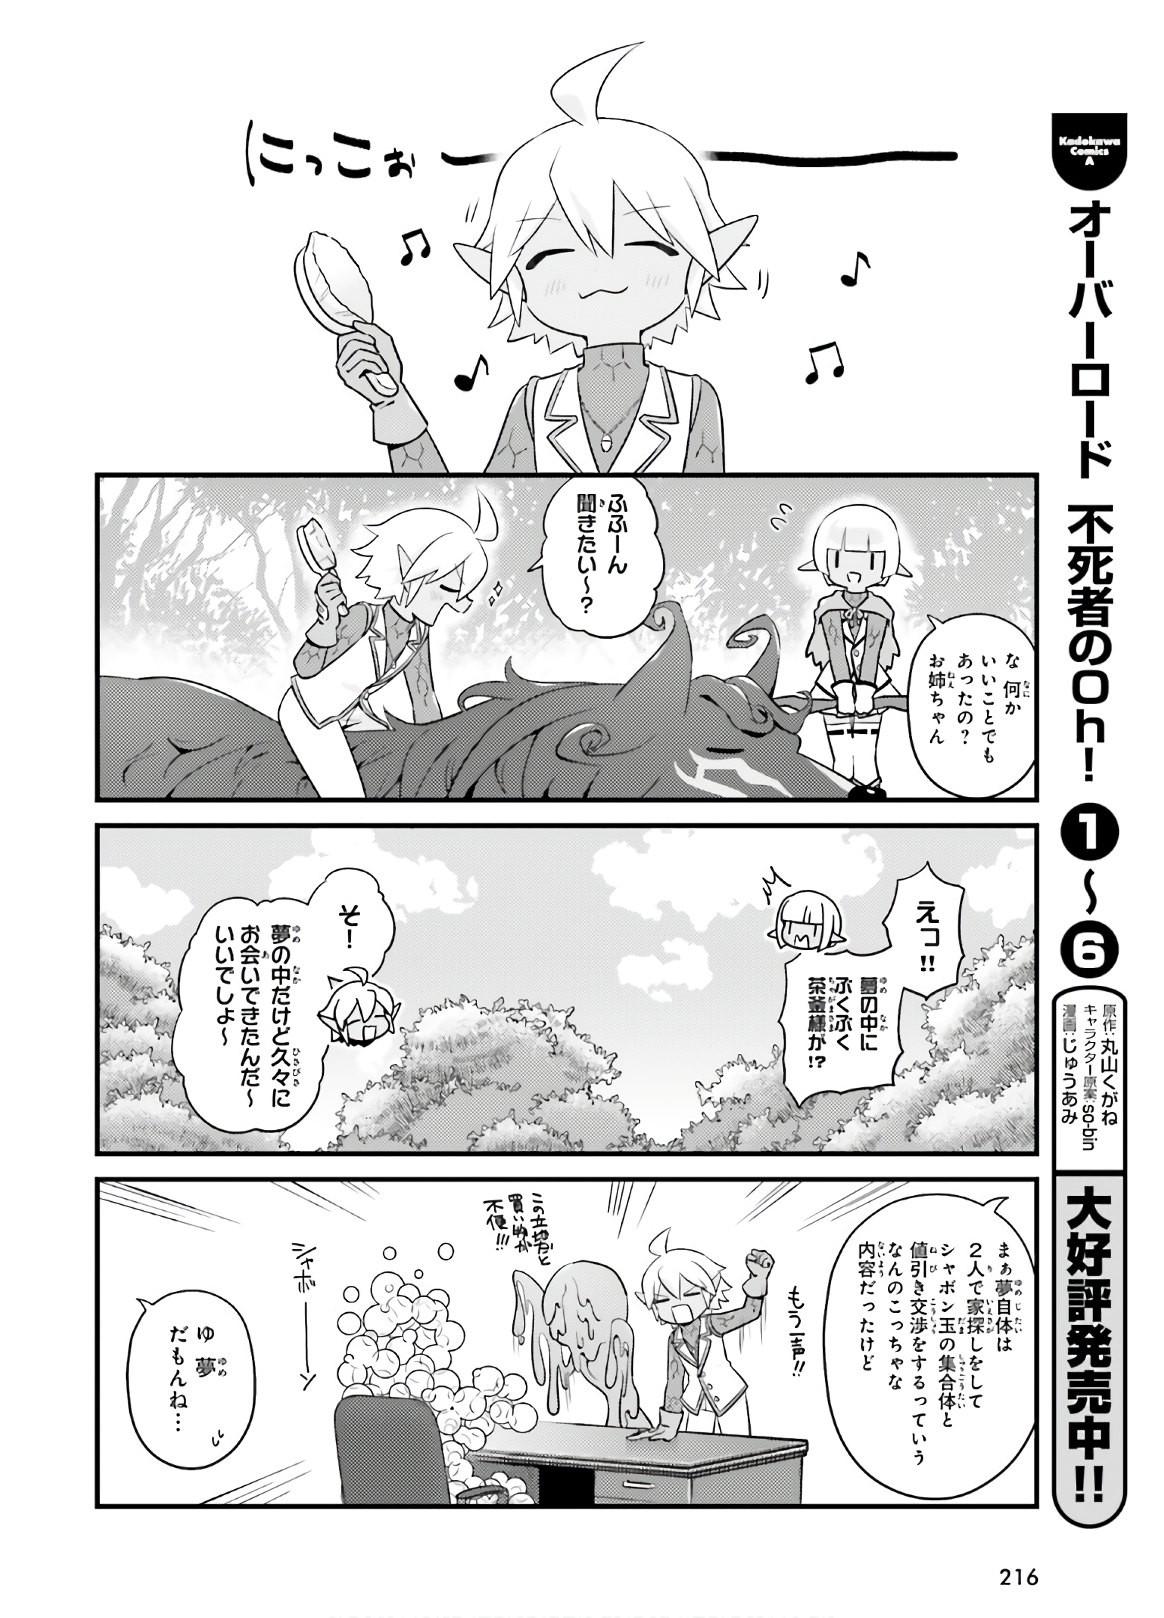 Overlord-Fushisha-no-Oh - Chapter 39 - Page 2